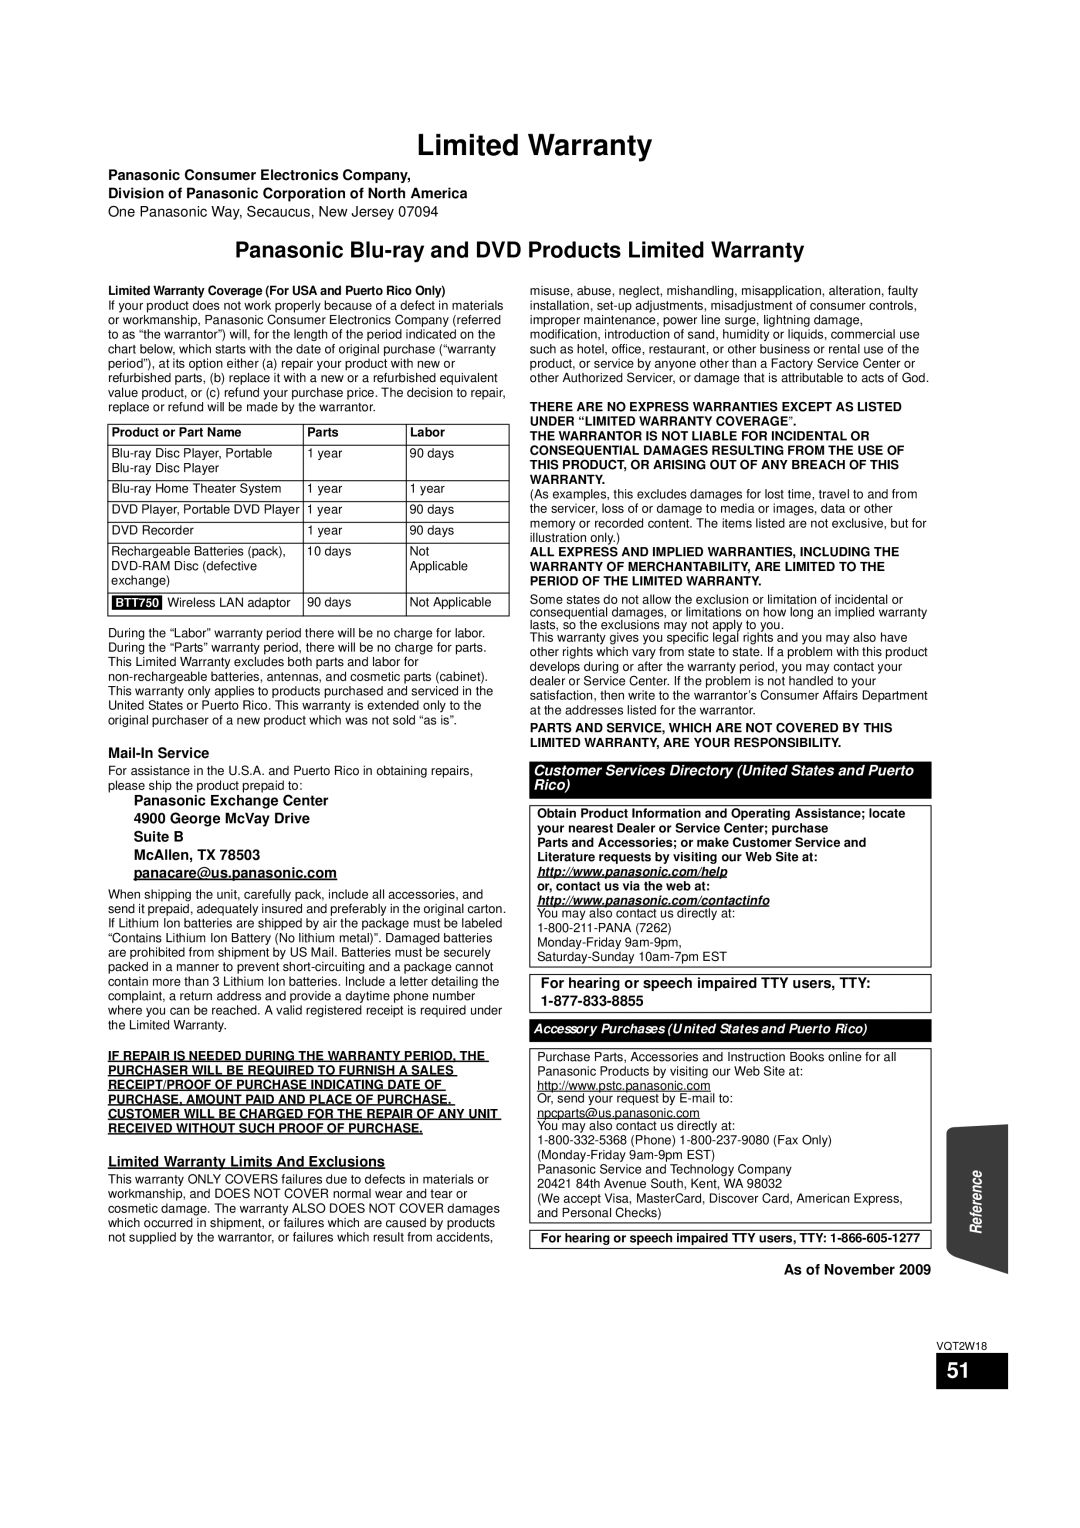 Panasonic SC-BTT750 Limited Warranty, Panasonic Consumer Electronics Company, Mail-InService, Suite B, As of November 